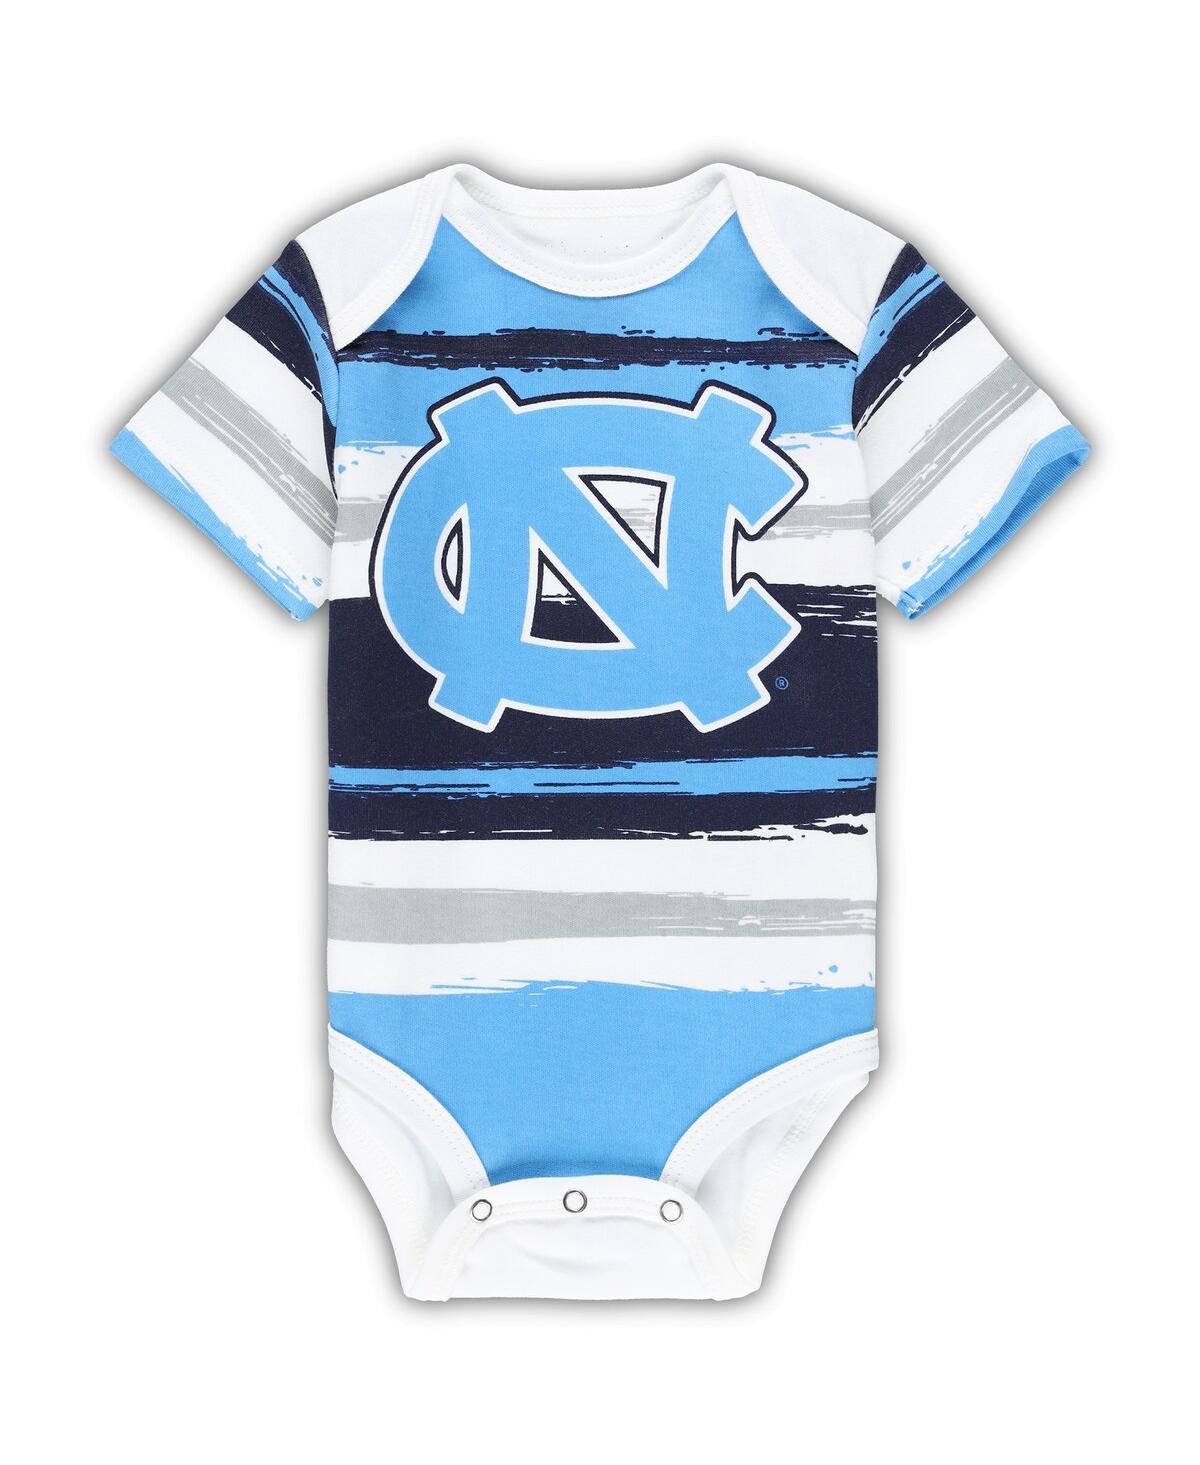 Outerstuff Babies' Newborn And Infant Boys And Girls White North Carolina Tar Heels Team Favorite Bodysuit